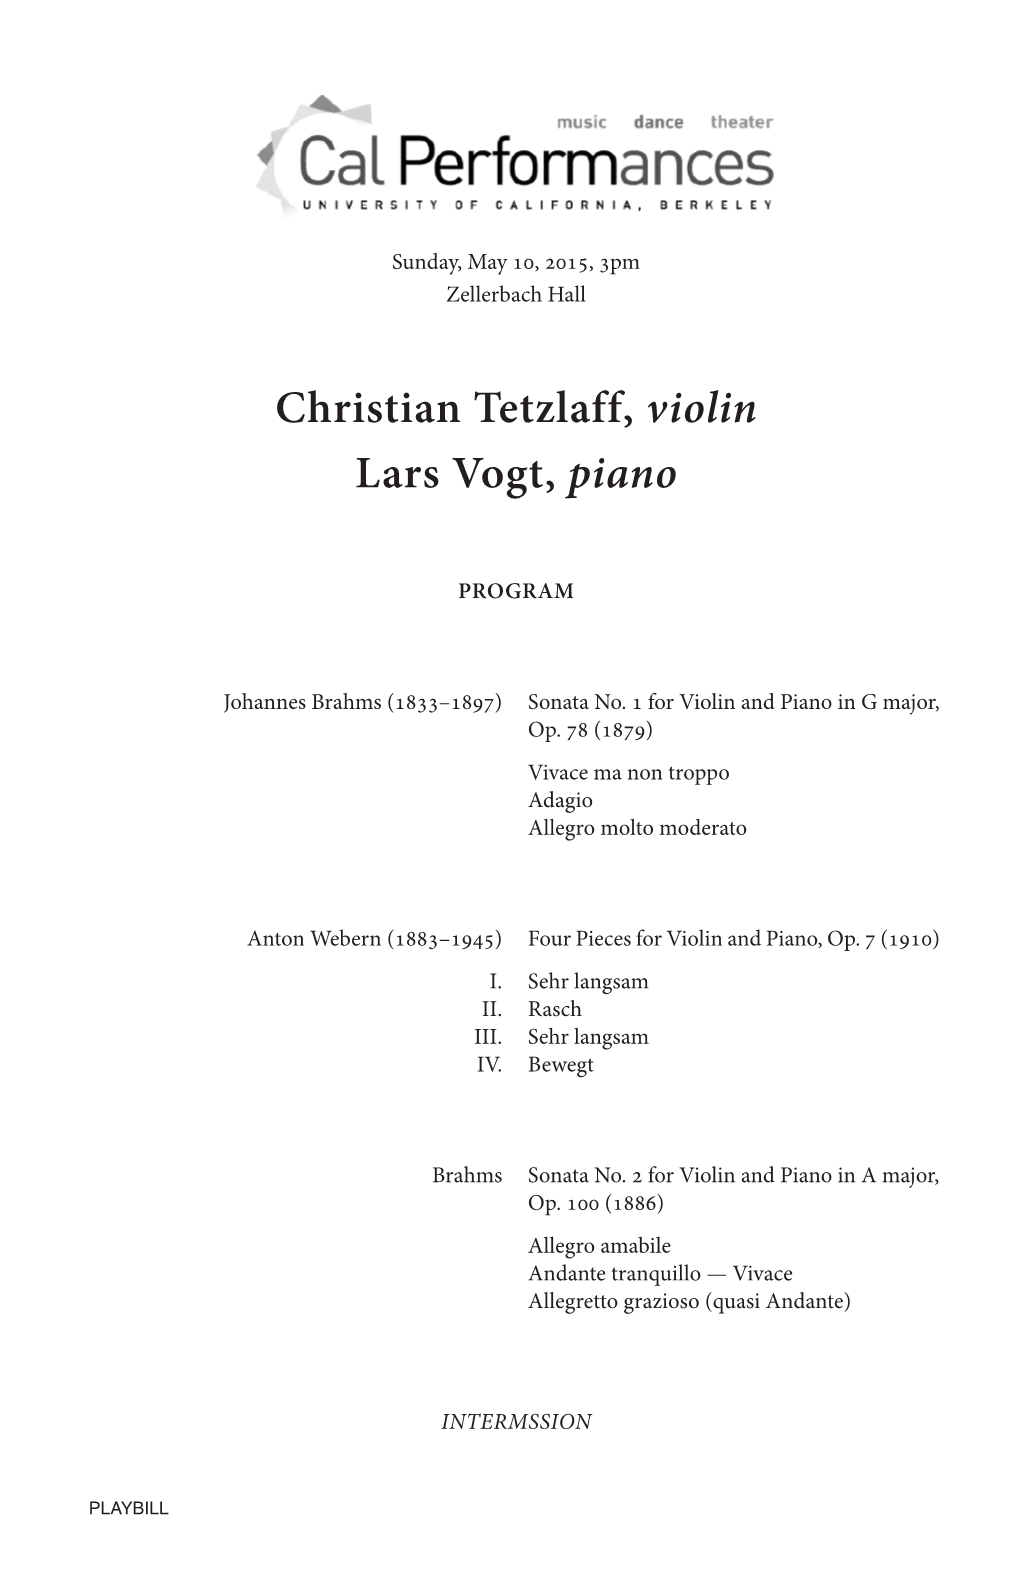 Christian Tetzlaff, Violin Lars Vogt, Piano